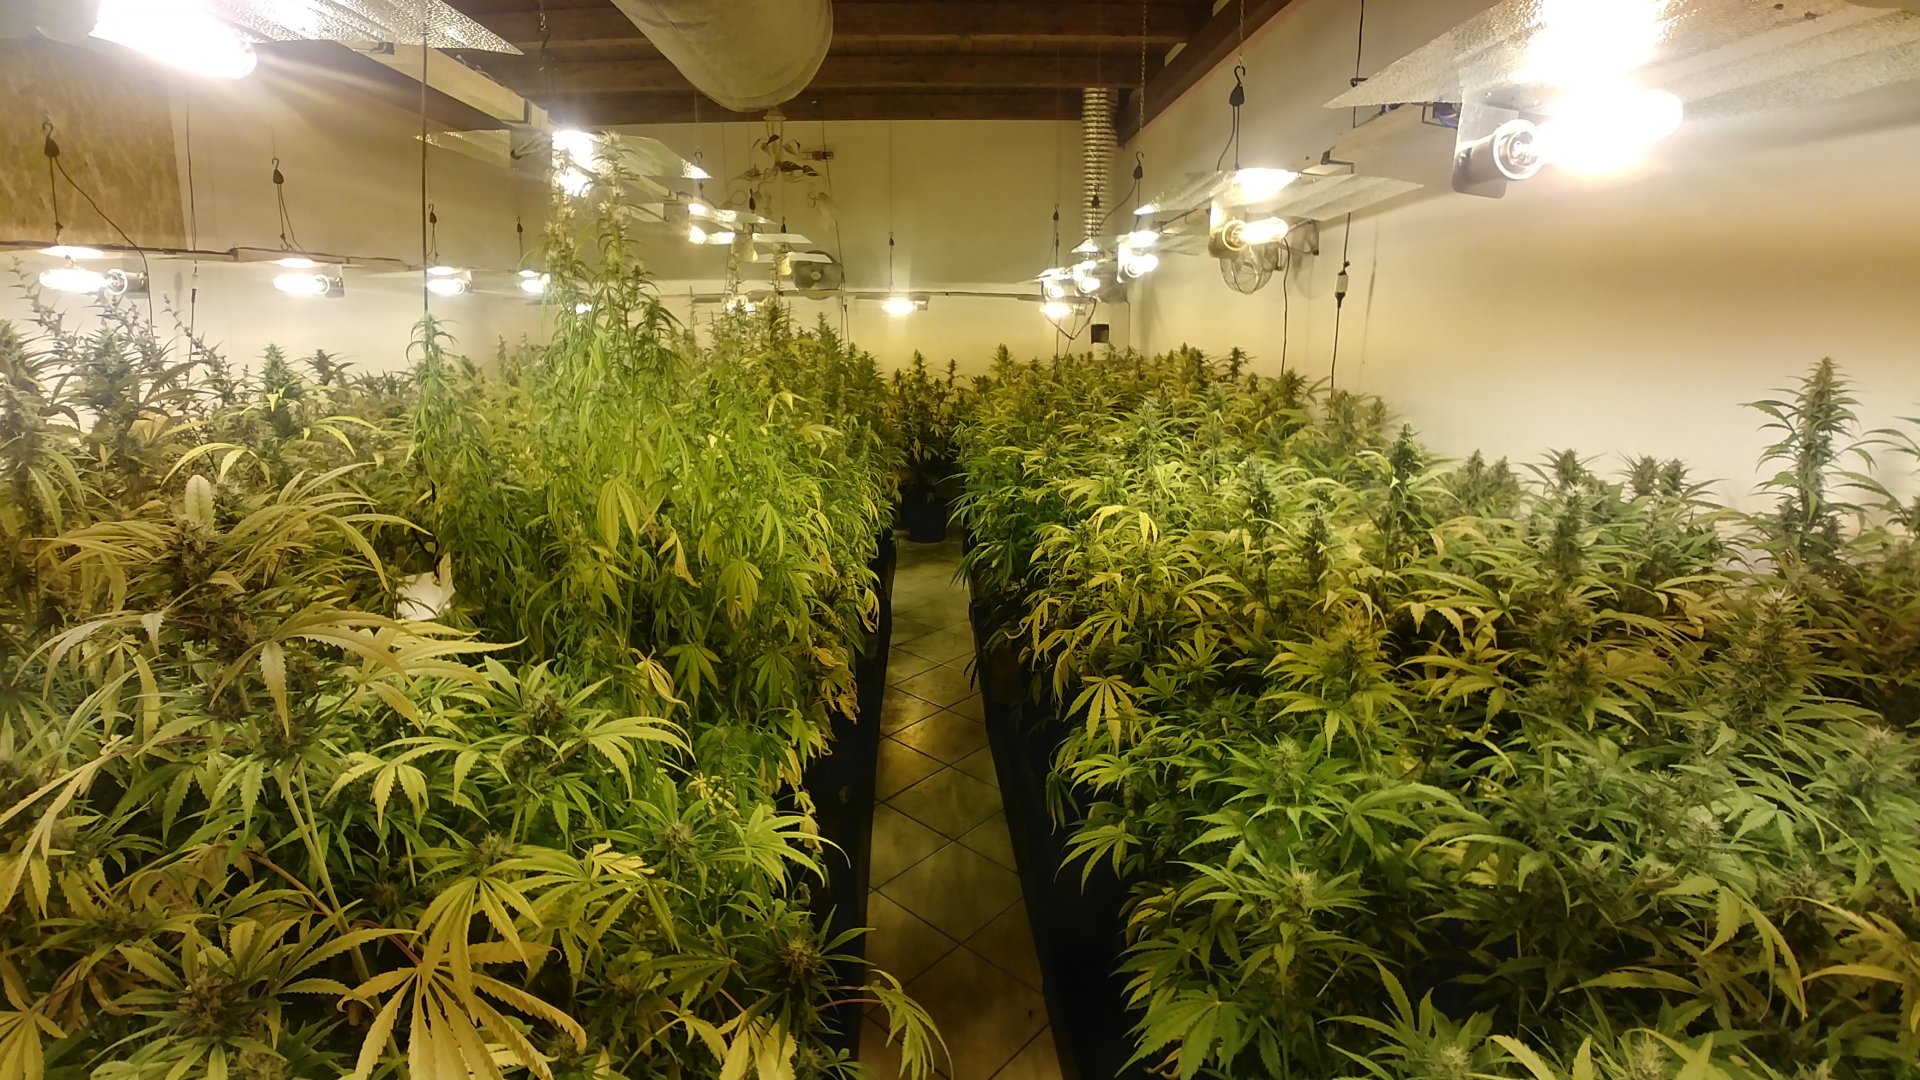 Coltiva marijuana in casa: sequestrate 316 piante FOTO